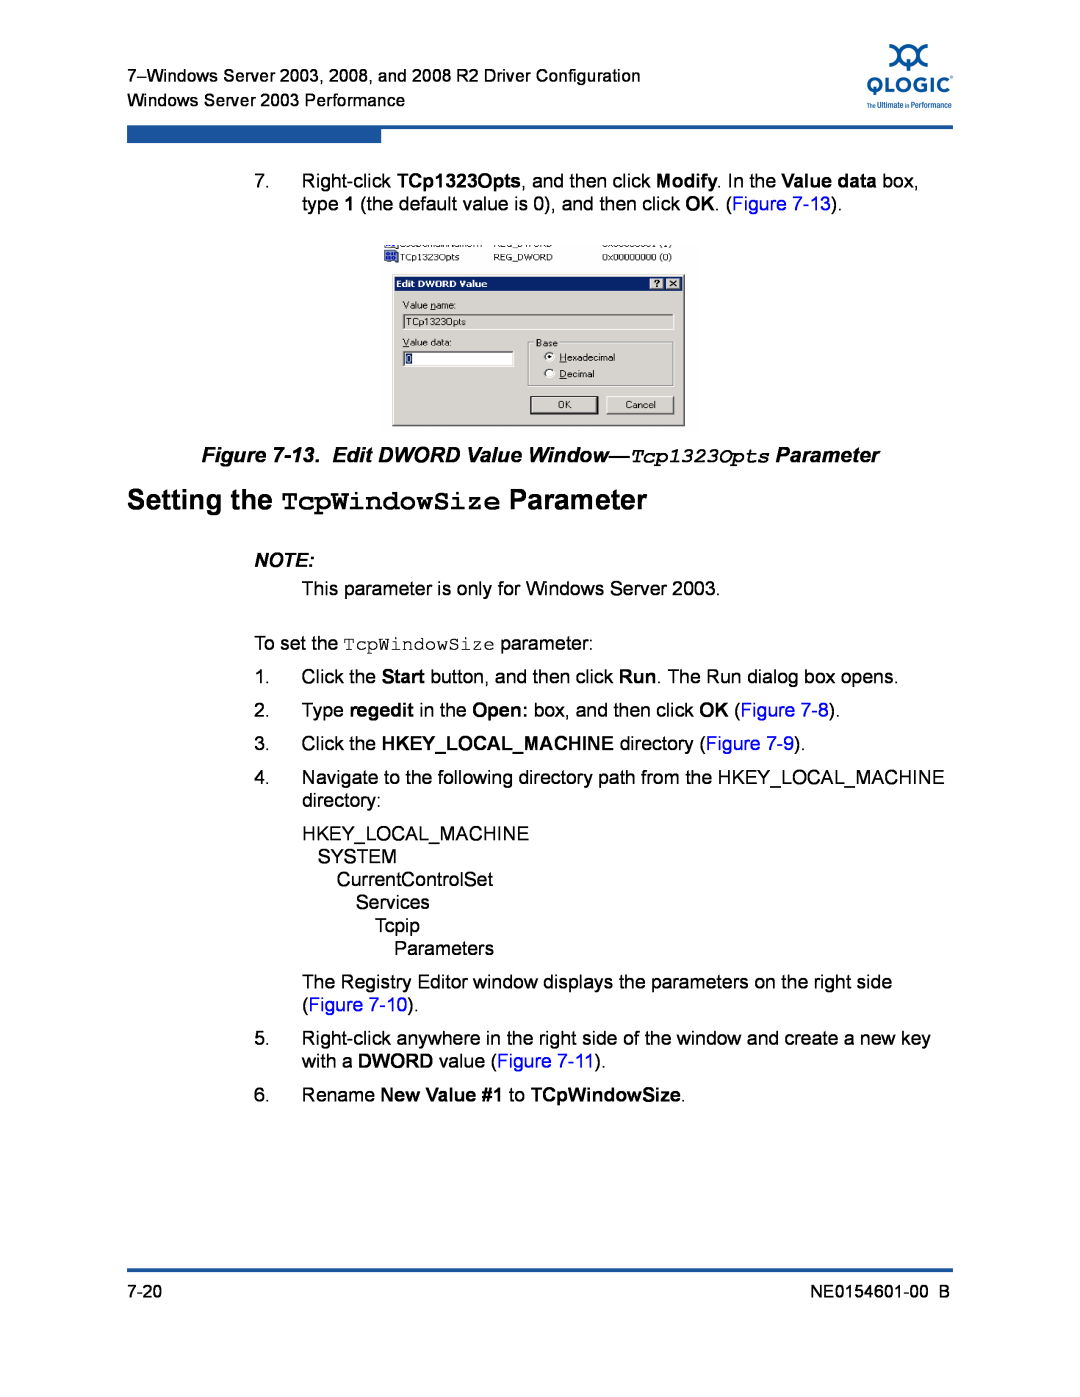 Q-Logic 3100, 3000 manual Setting the TcpWindowSize Parameter, 13. Edit DWORD Value Window-Tcp1323Opts Parameter 